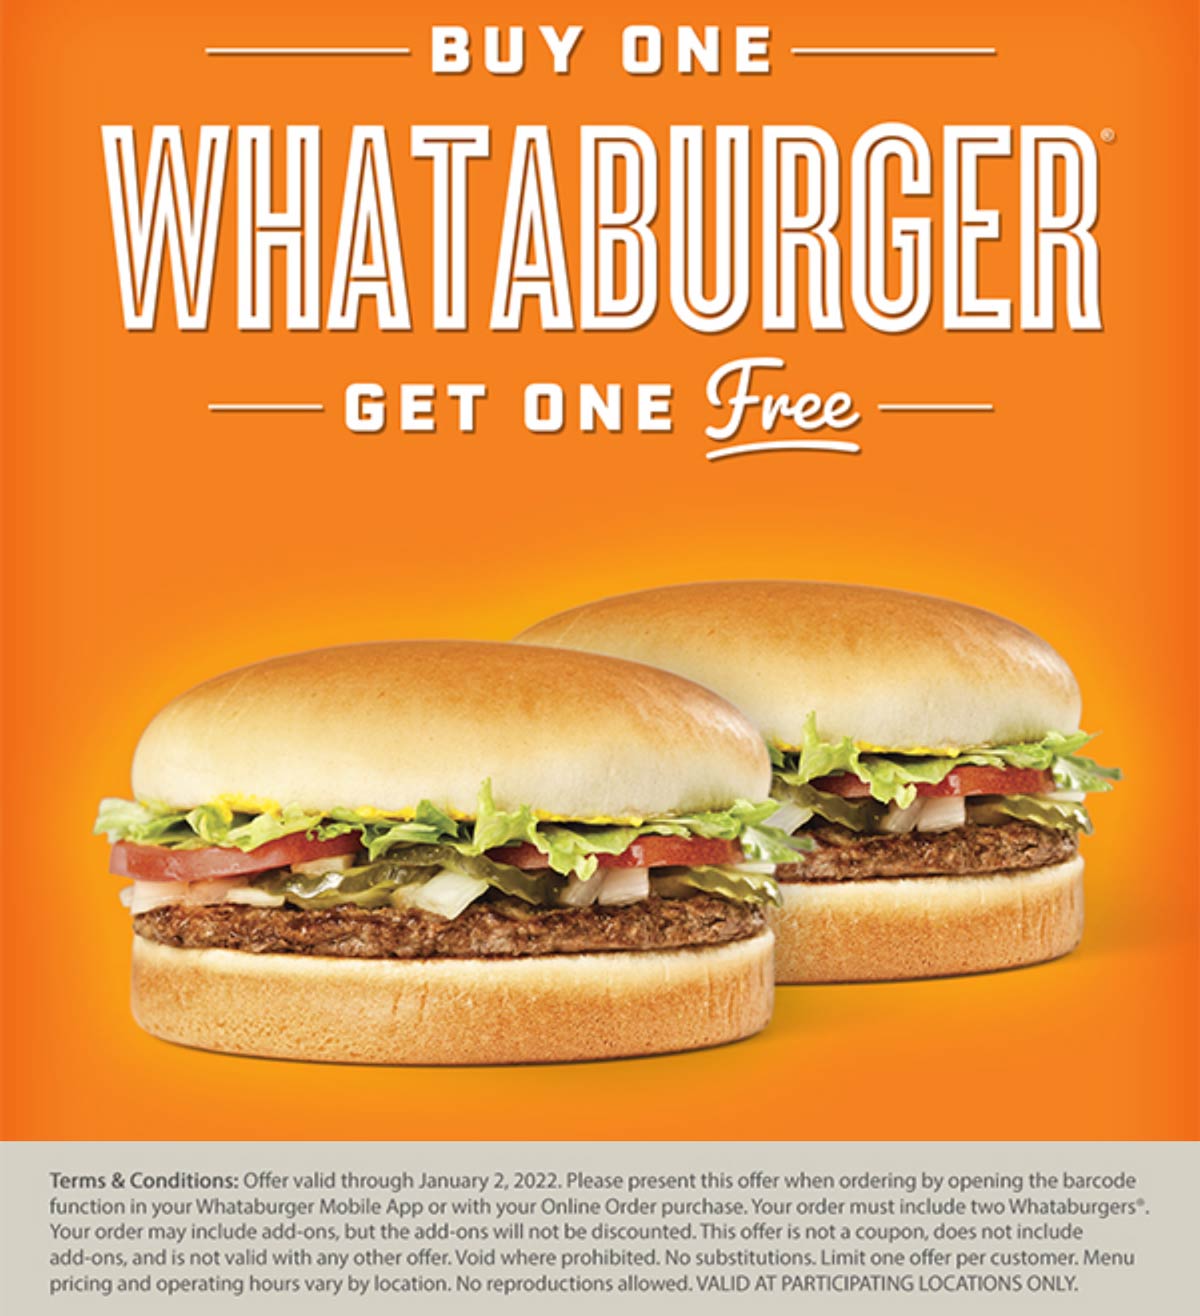 Whataburger restaurants Coupon  Second hamburger free via mobile at Whataburger restaurants #whataburger 